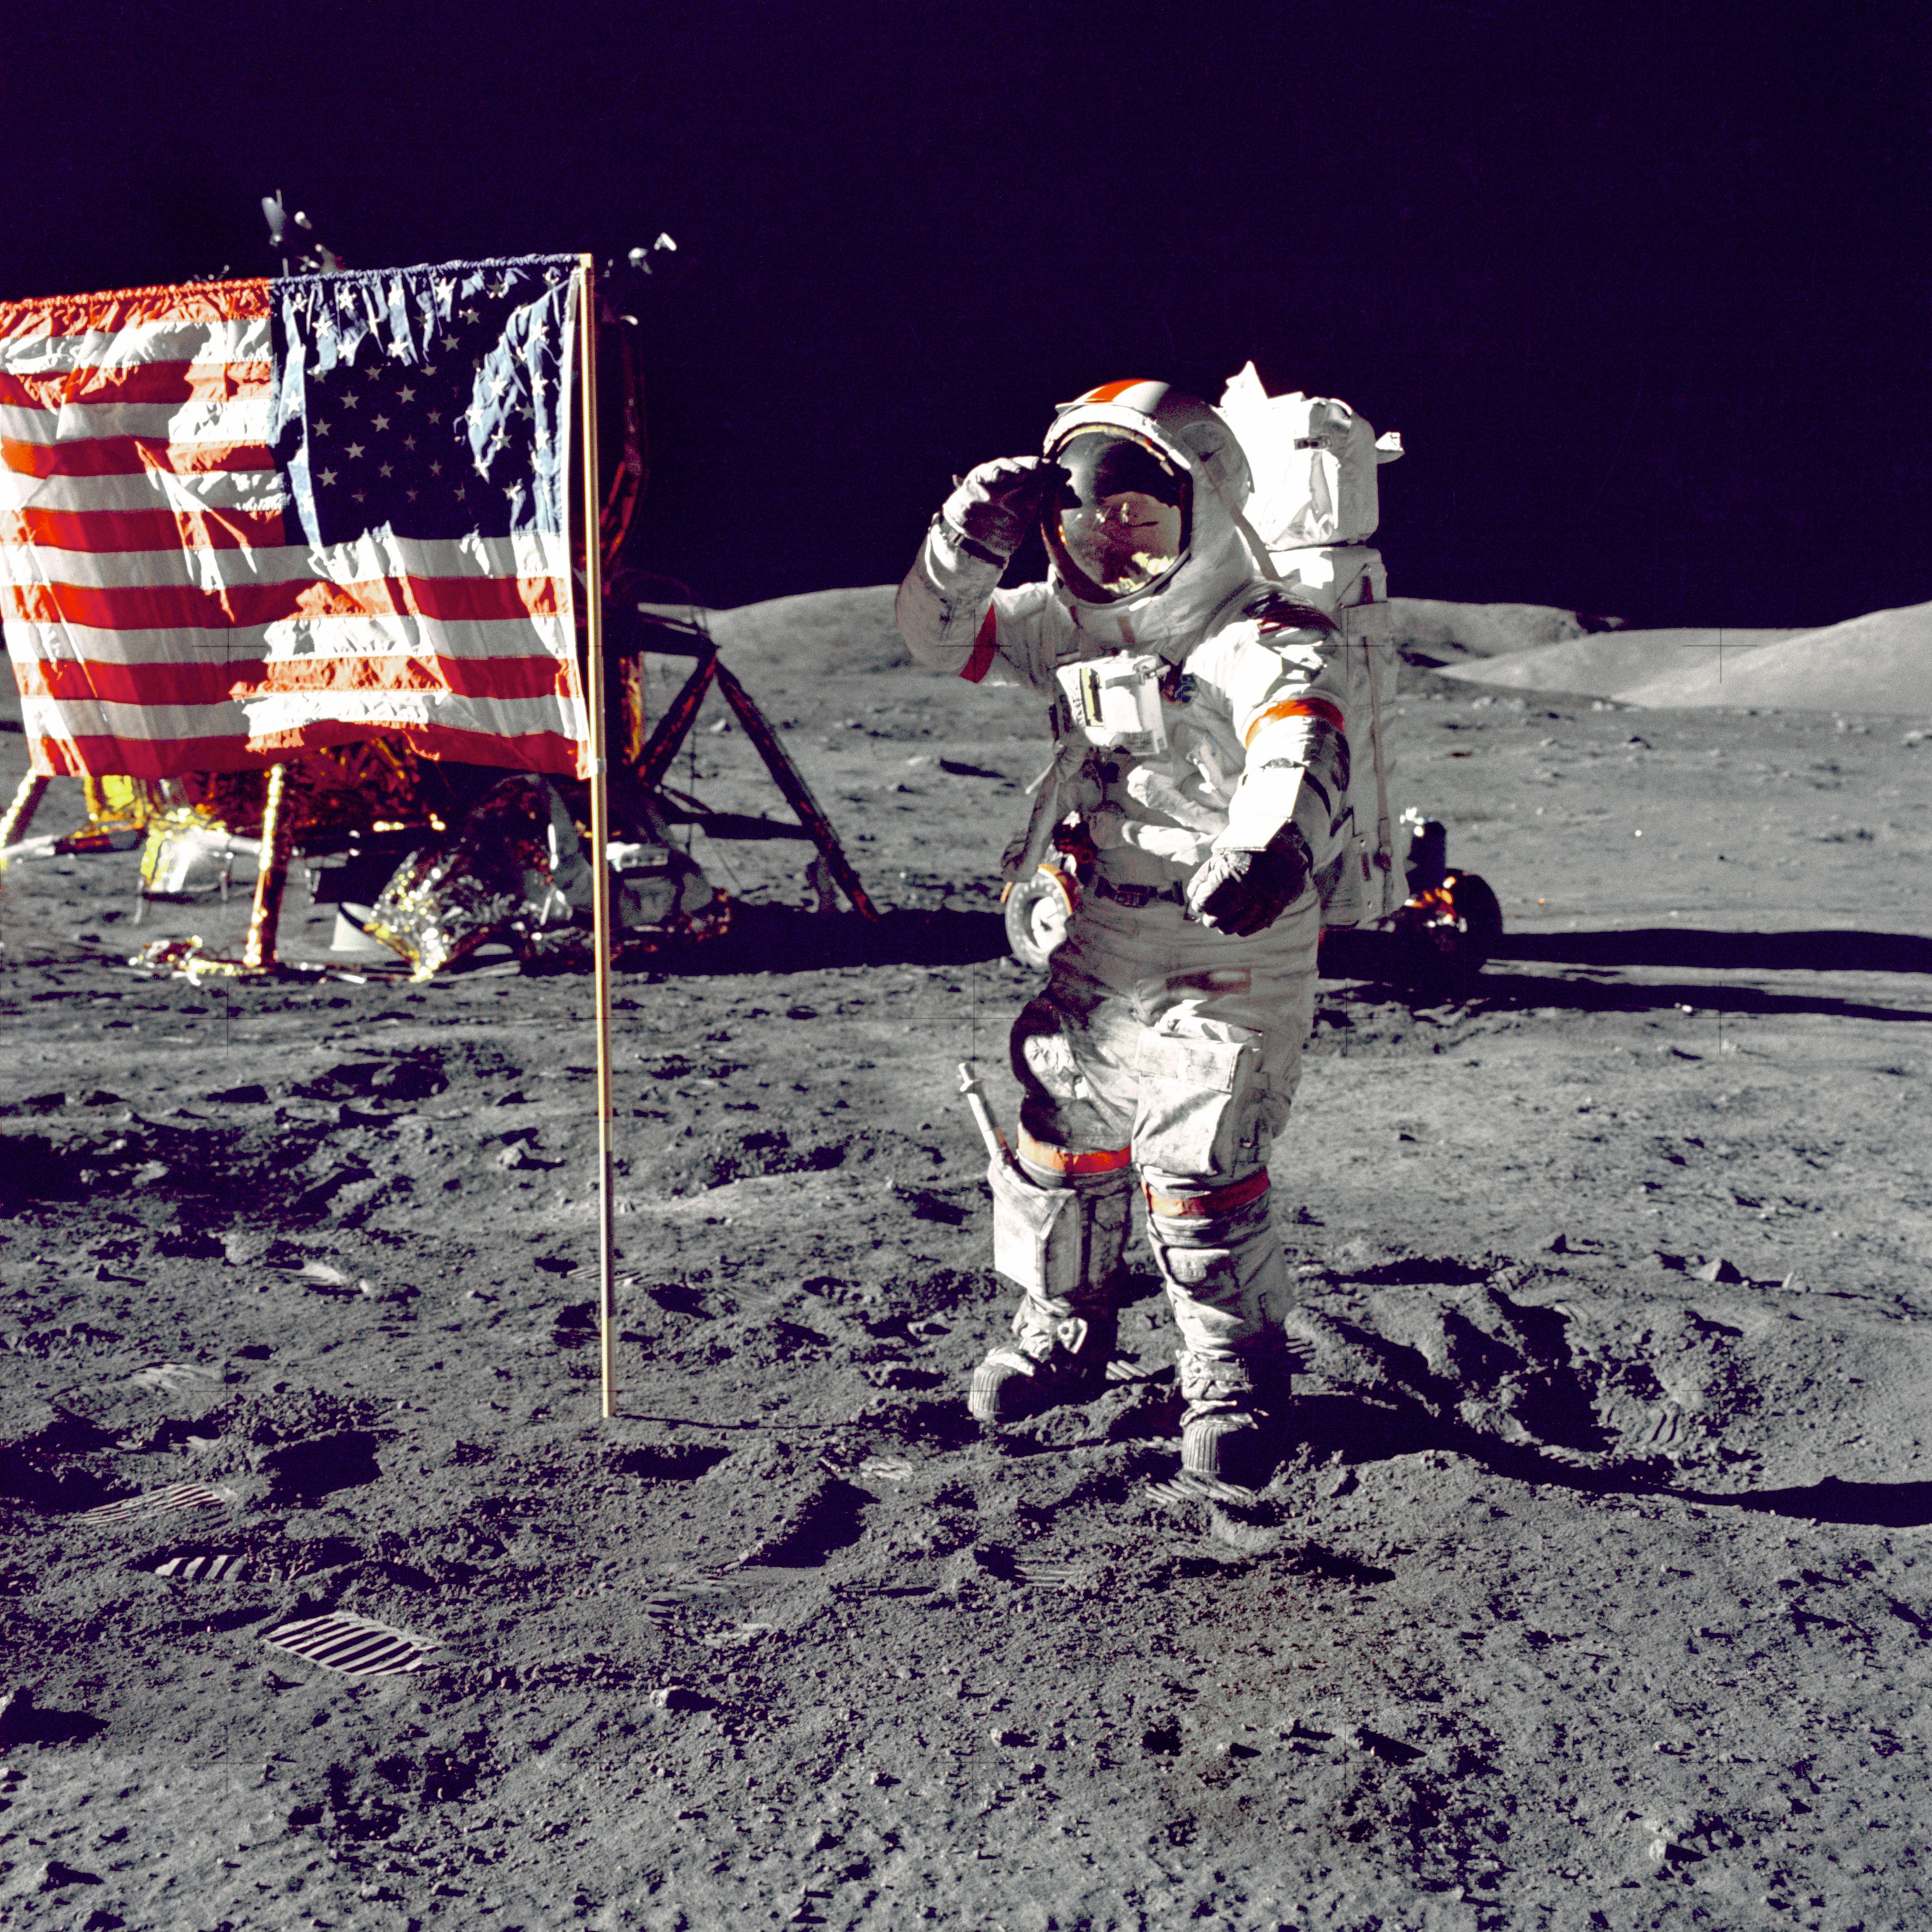 Бесплатное фото Космонавт на луне с американским флагом